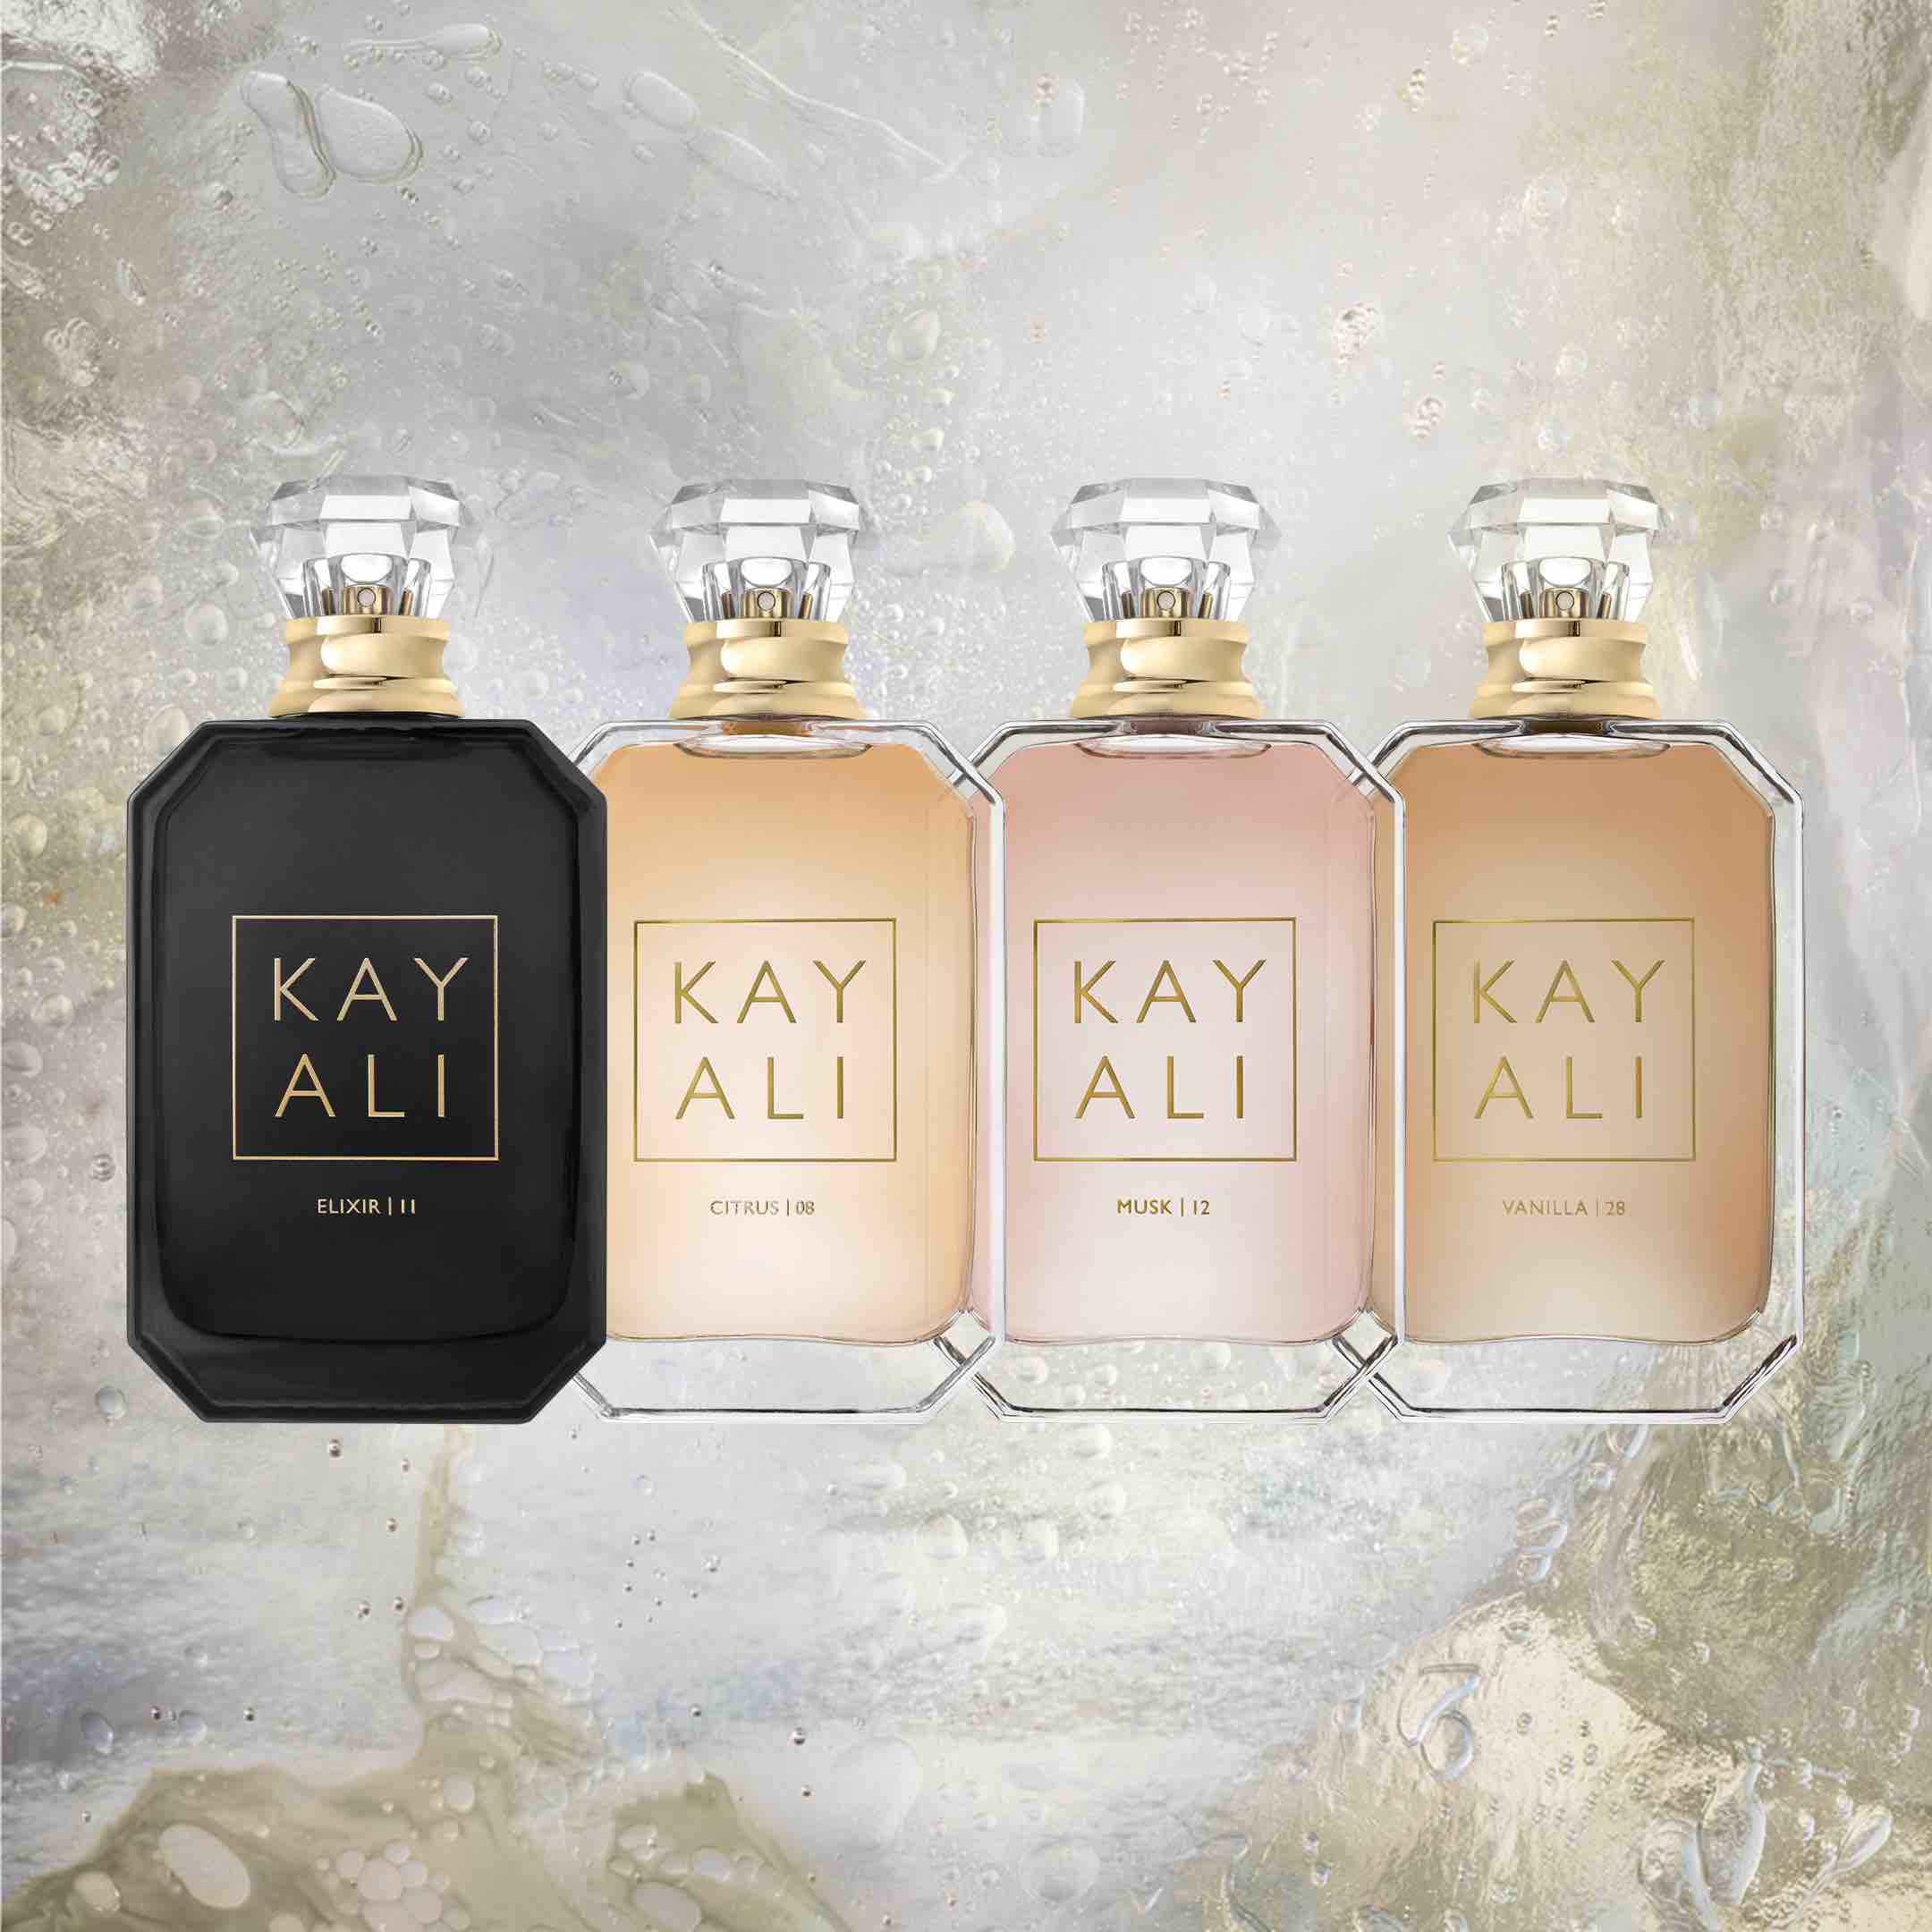 Kayali fragrances